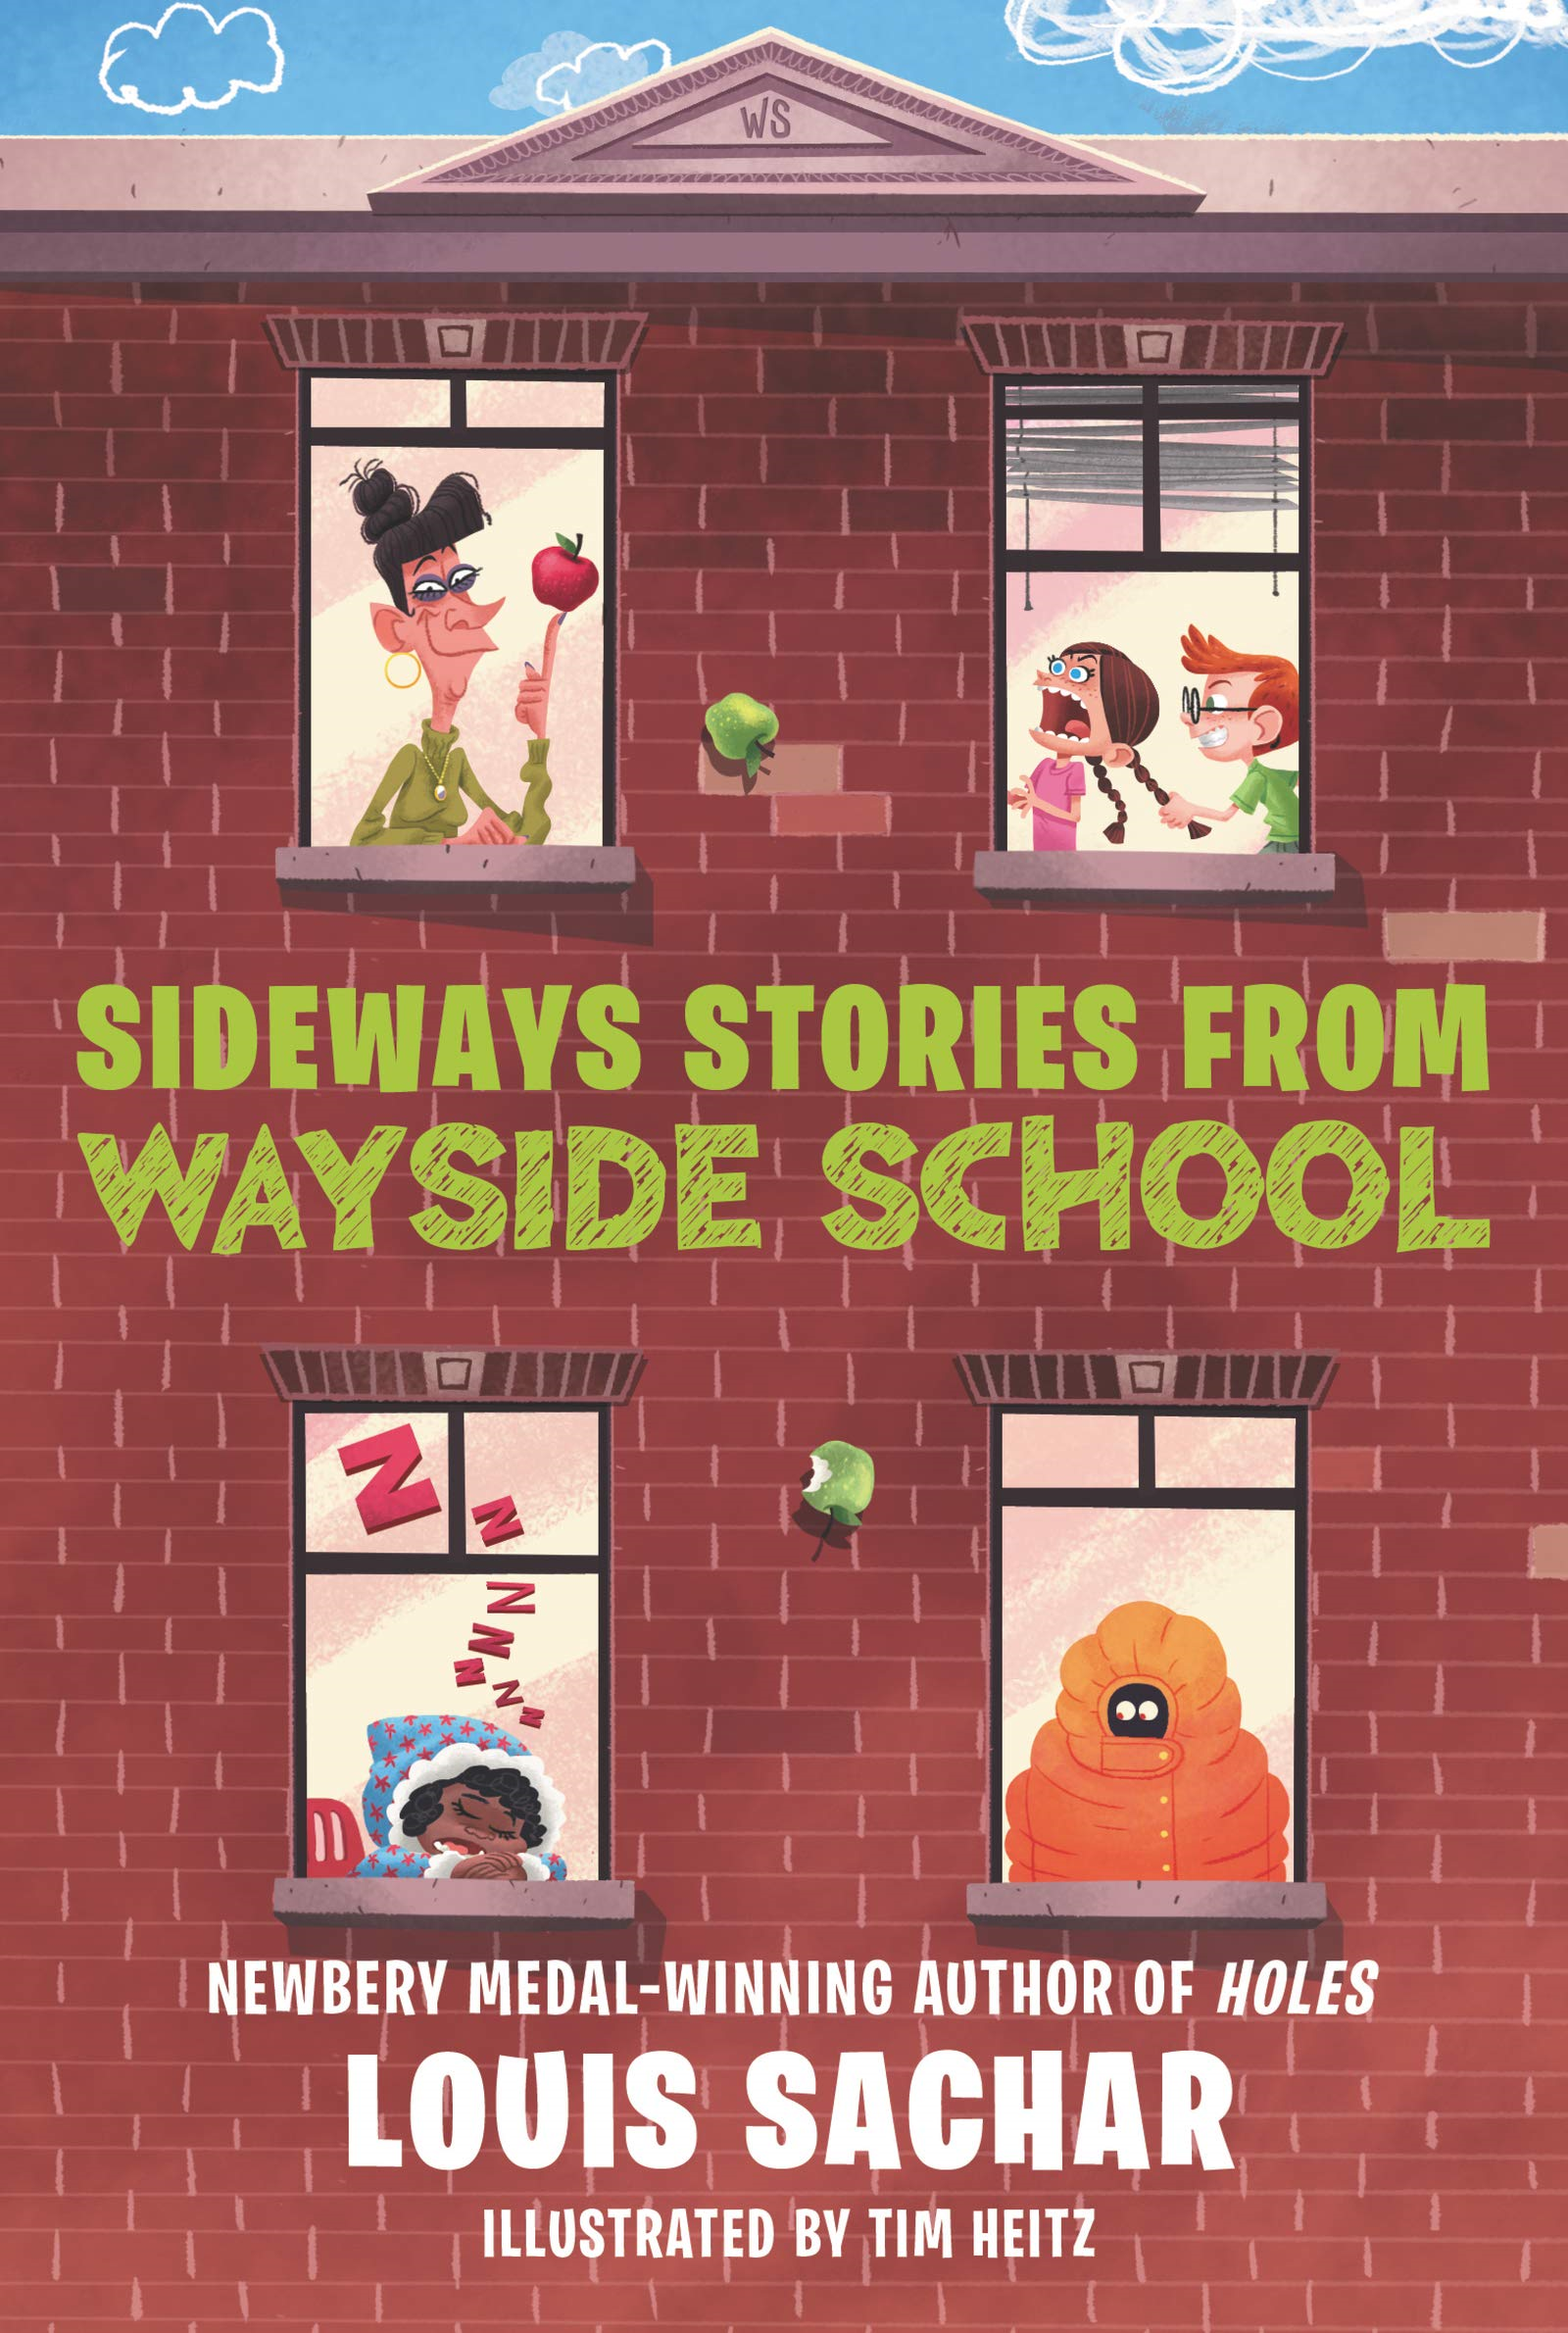 Wayside School (book series), Wayside School Wikia